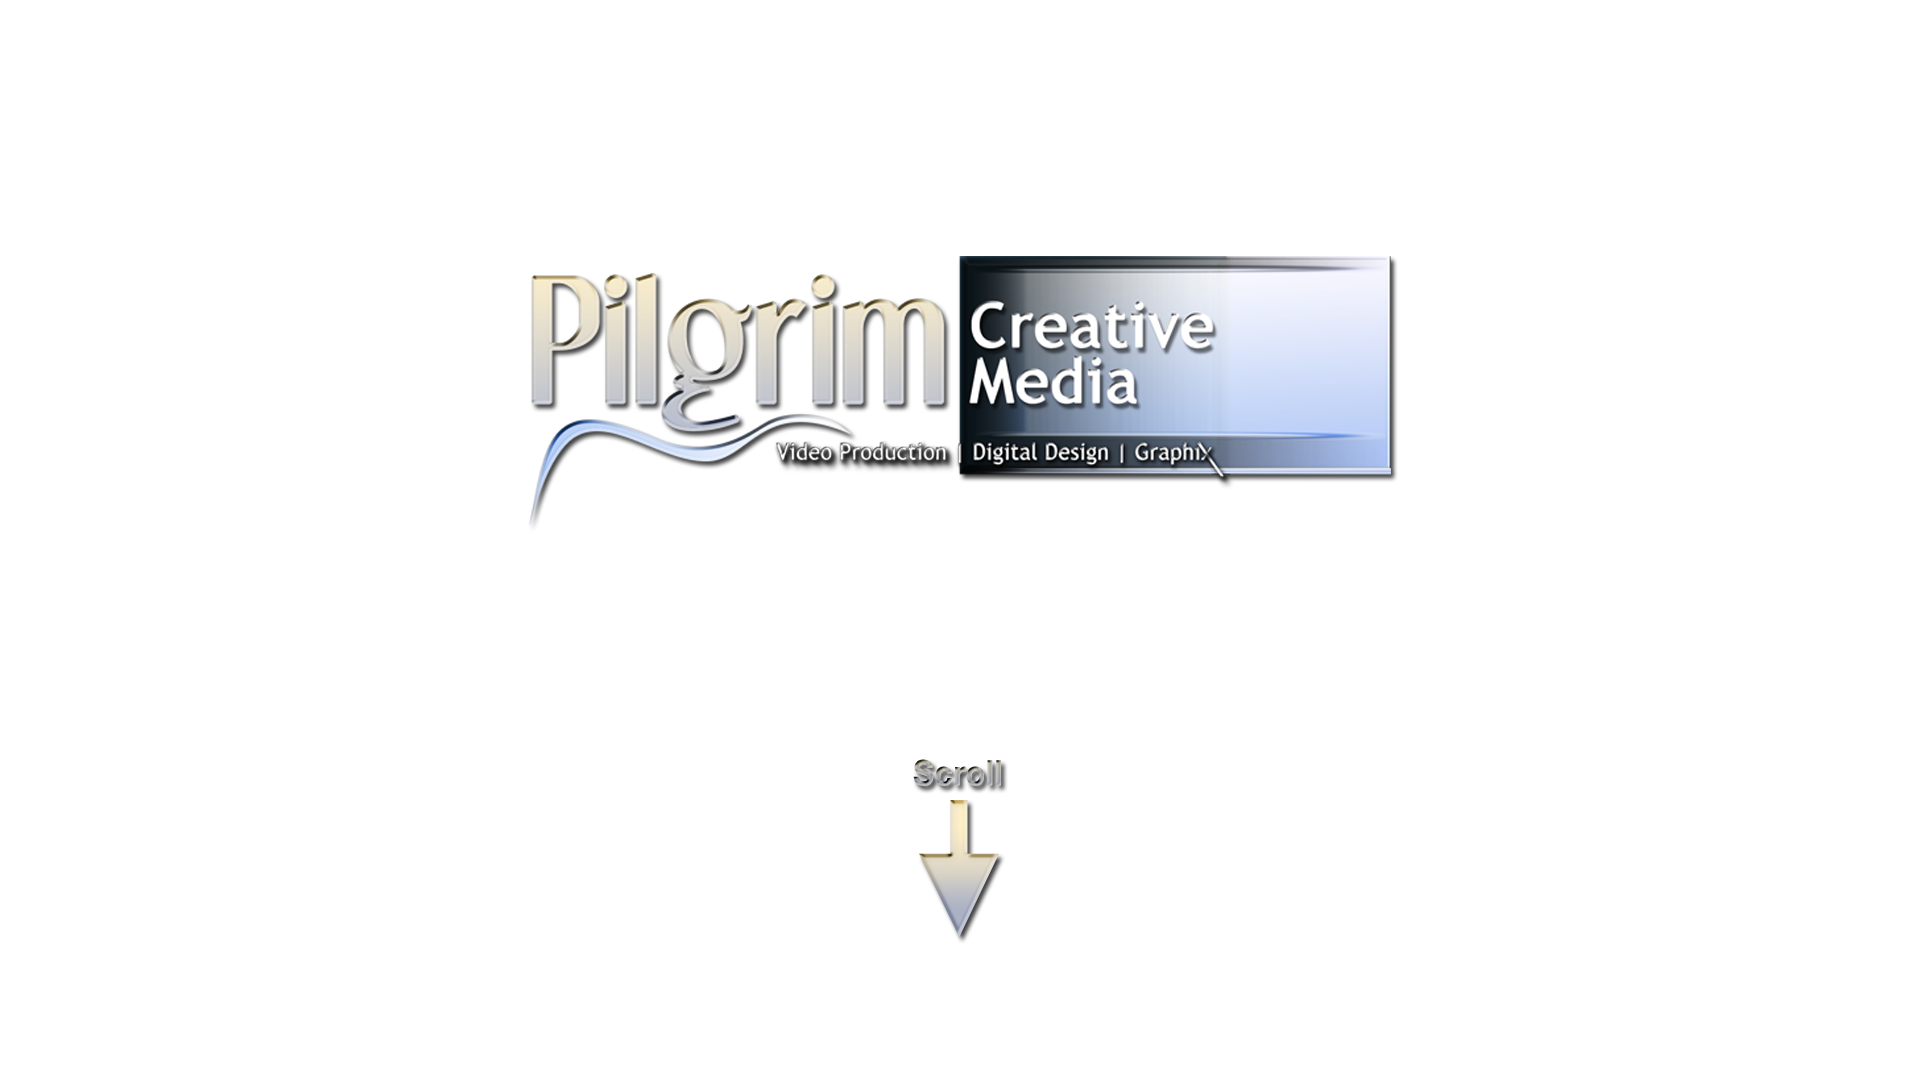 Pilgrim Creative Media - Scroll to learn more